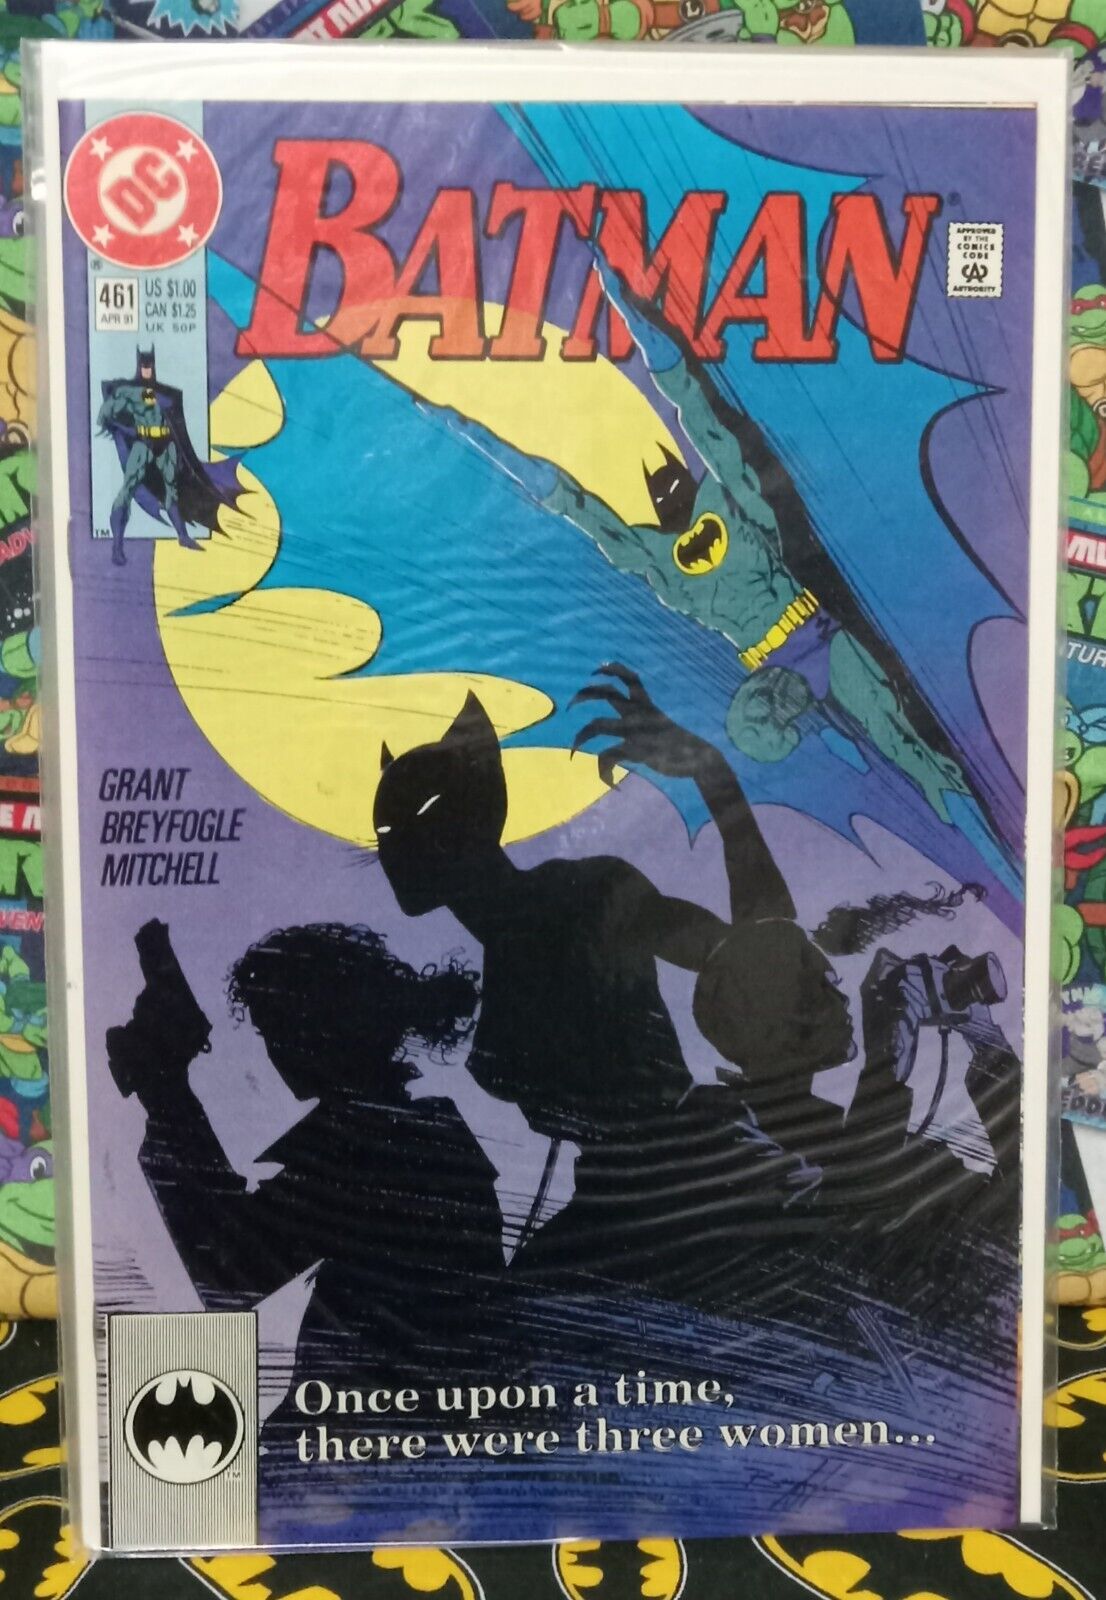 Batman (Apr/91/#461)